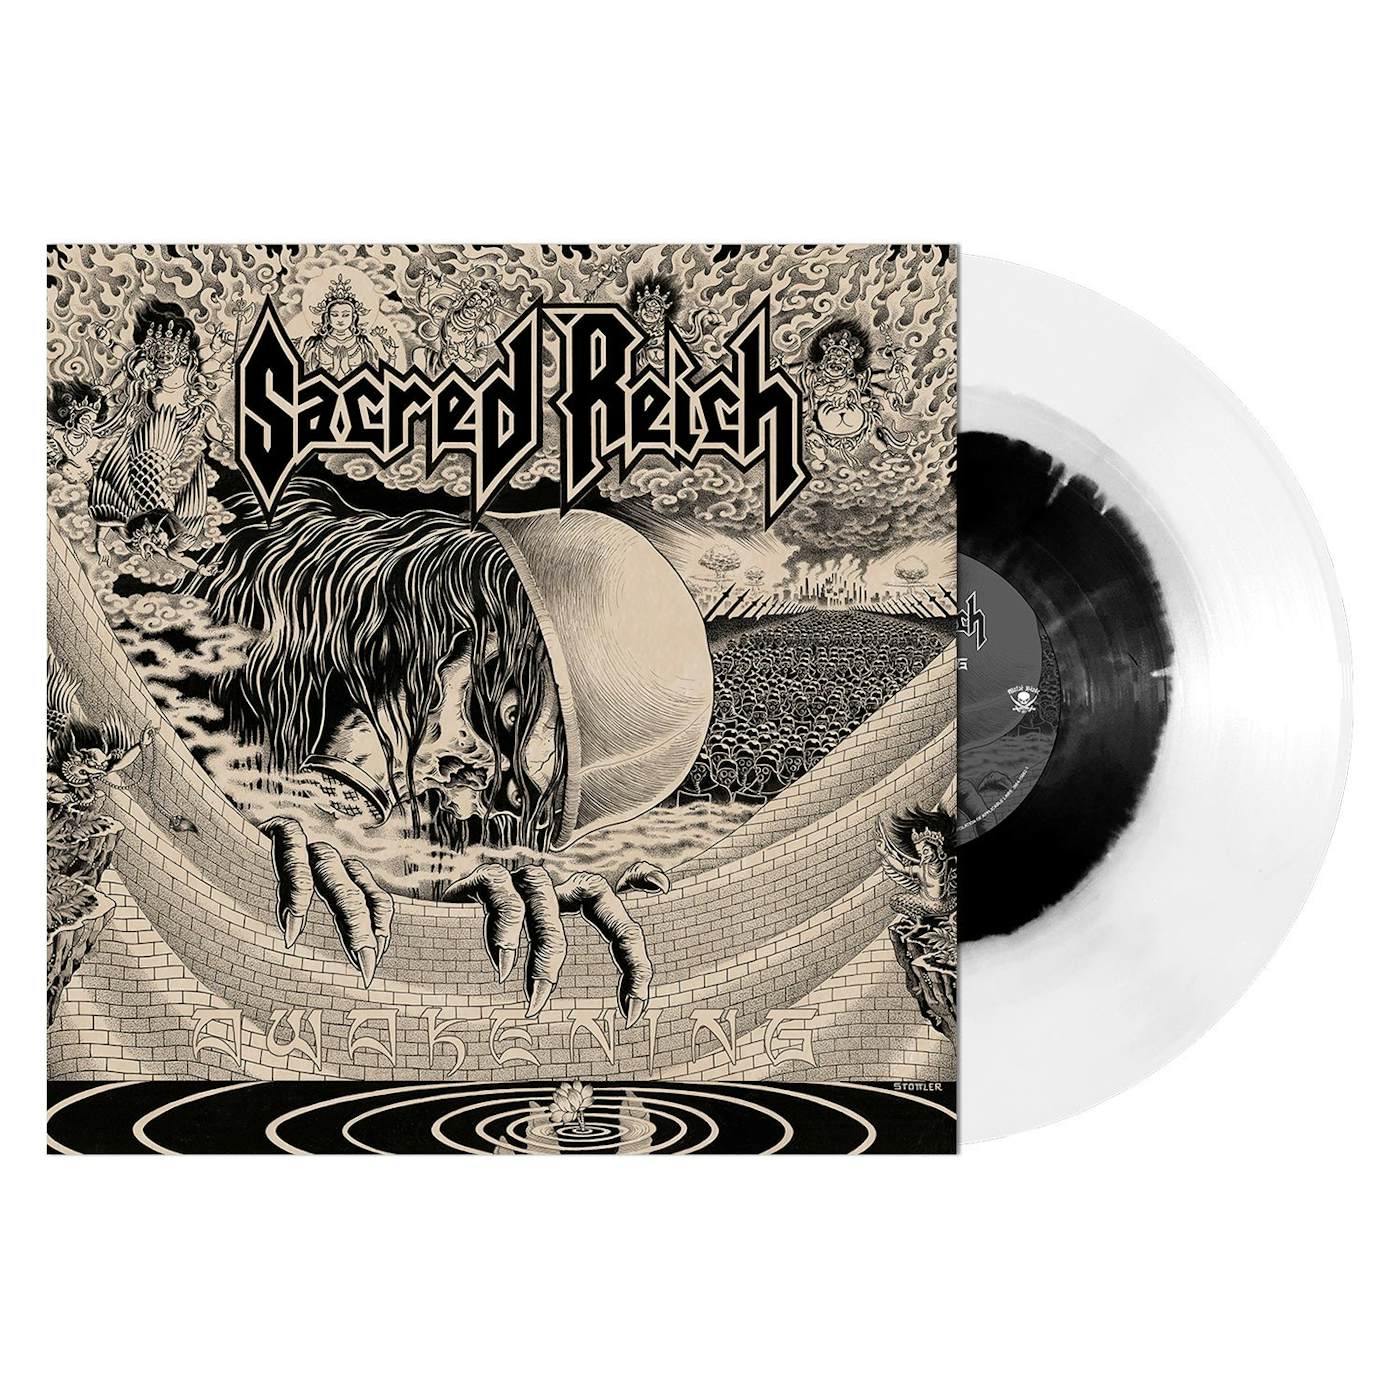 Sacred Reich "Awakening (Haze Vinyl)" 12"